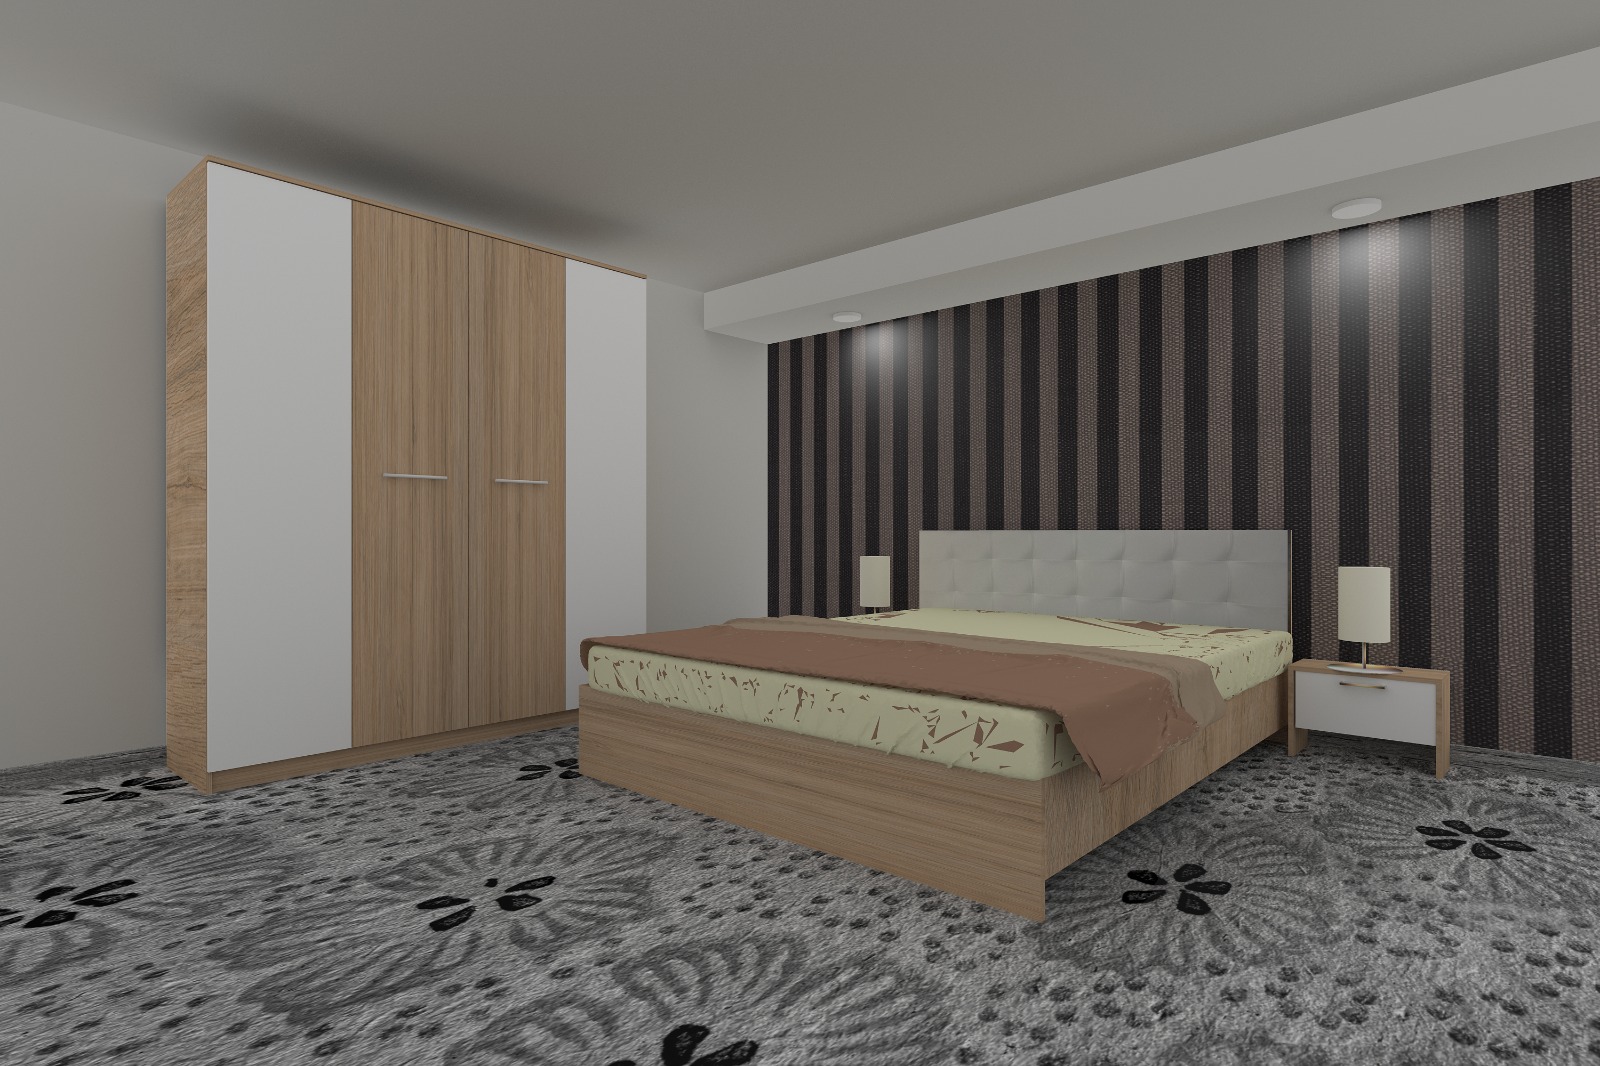 Dormitor Luiza 4U4PTA, culoare sonoma / alb, cu pat tapiterie alba 140 x 200, dulap cu 4 usi 164 cm si 2 noptiere